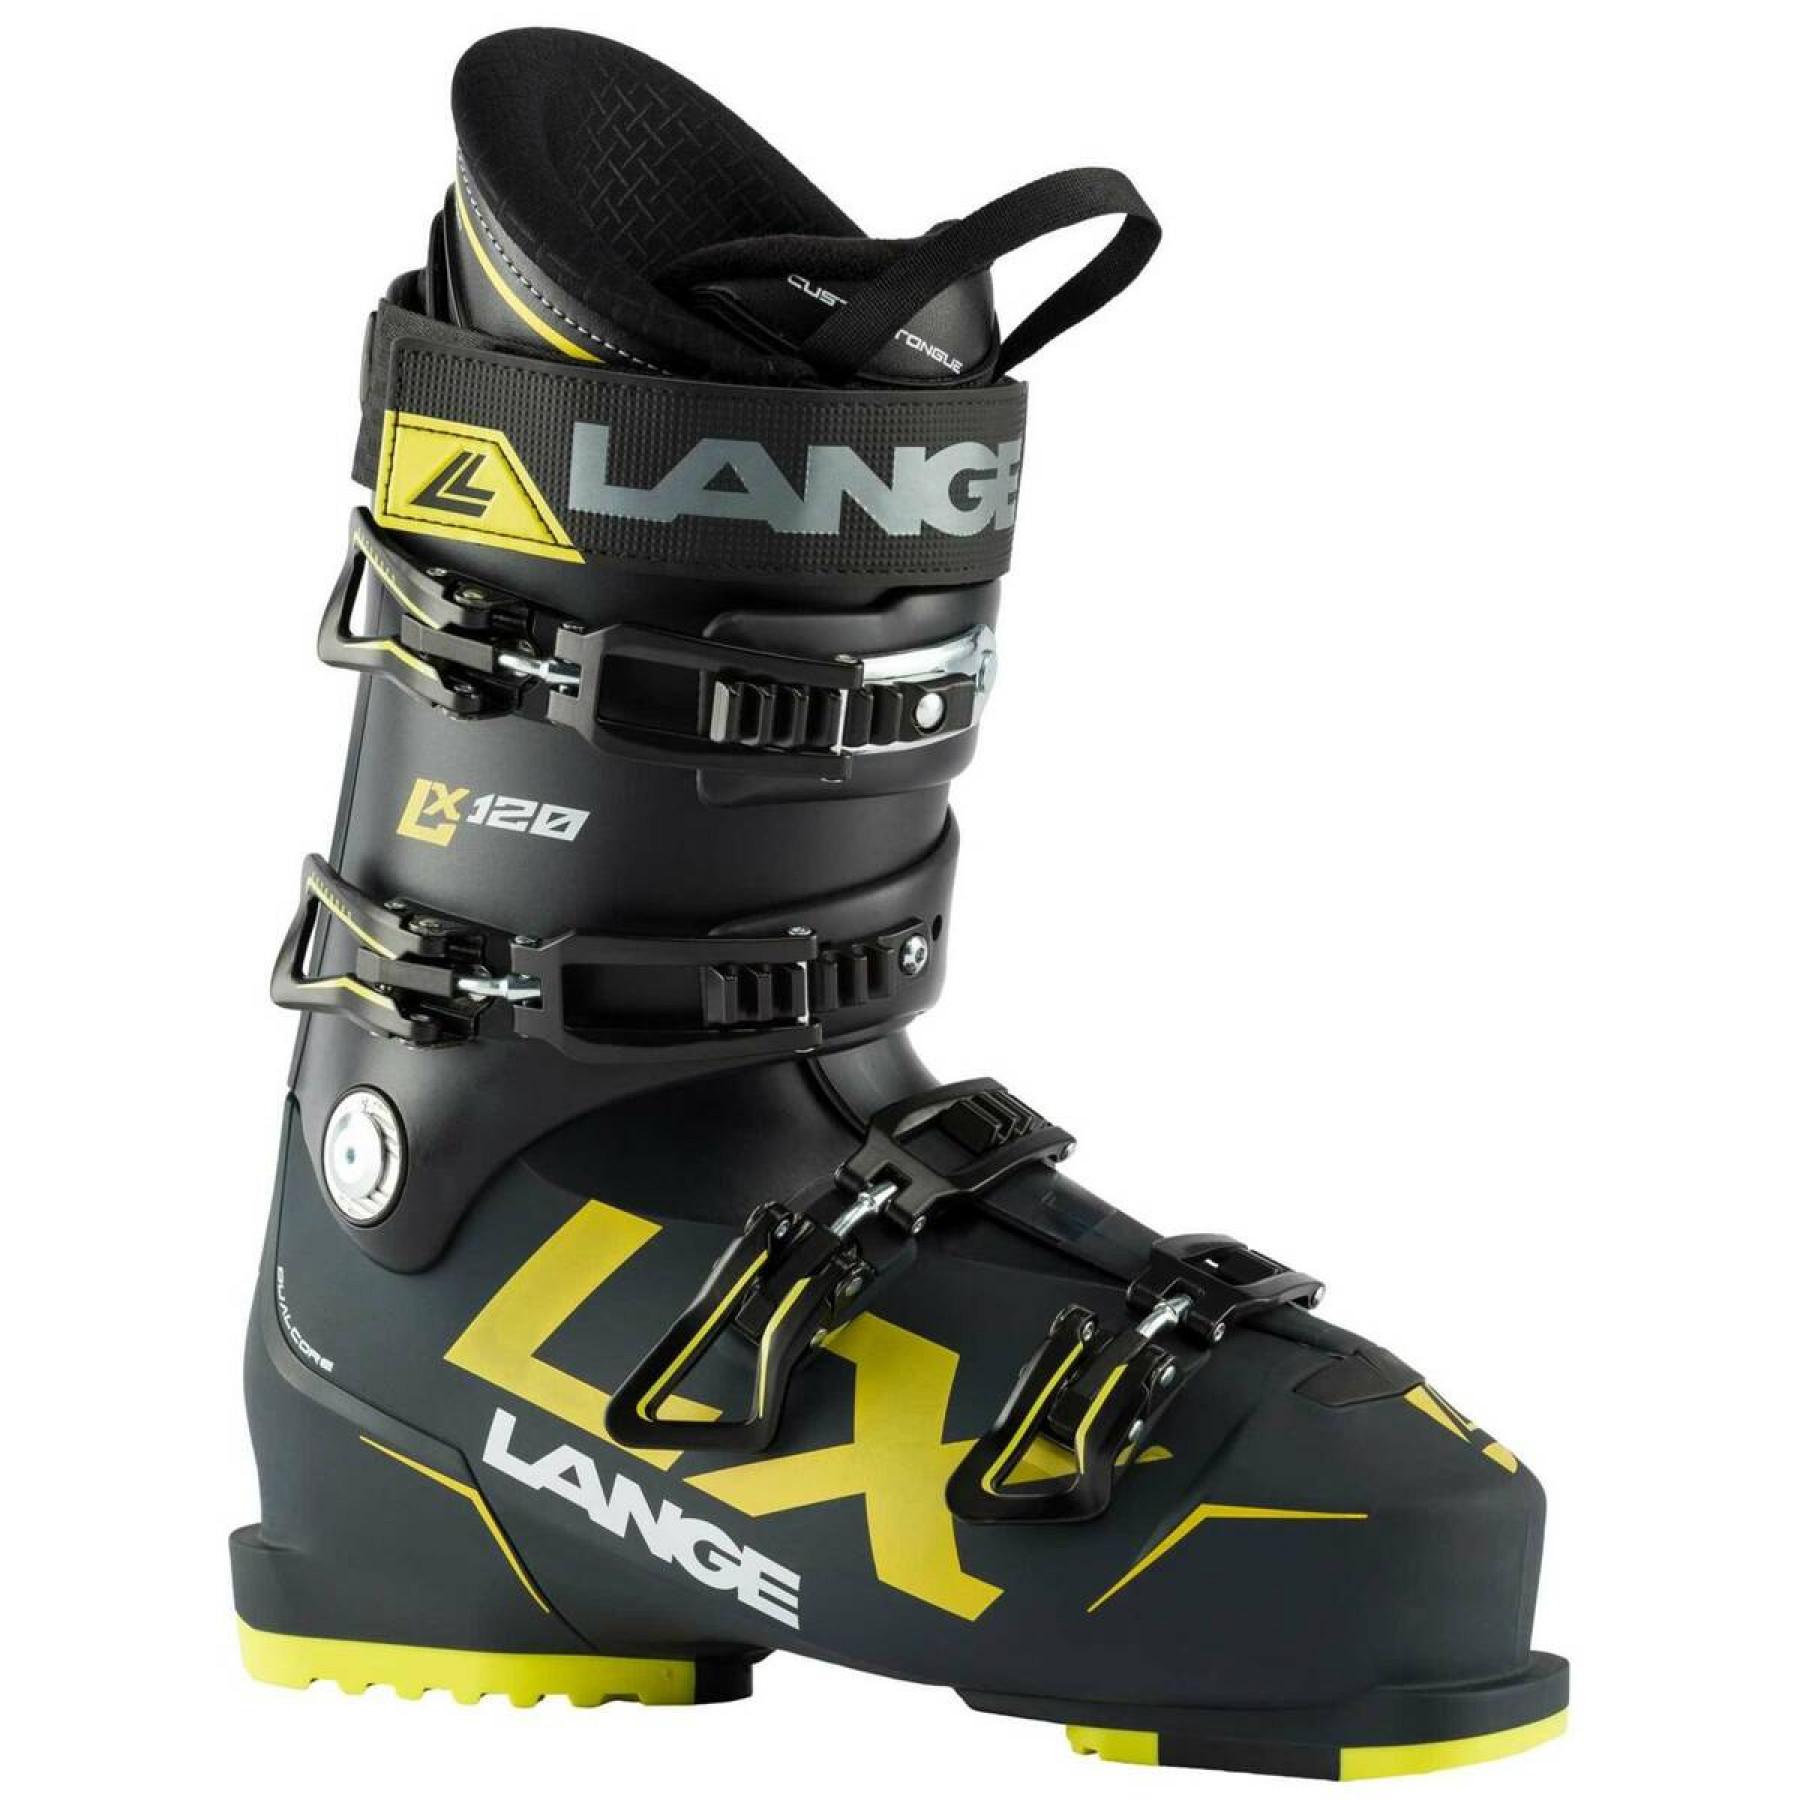 Ski boots Lange lx 120